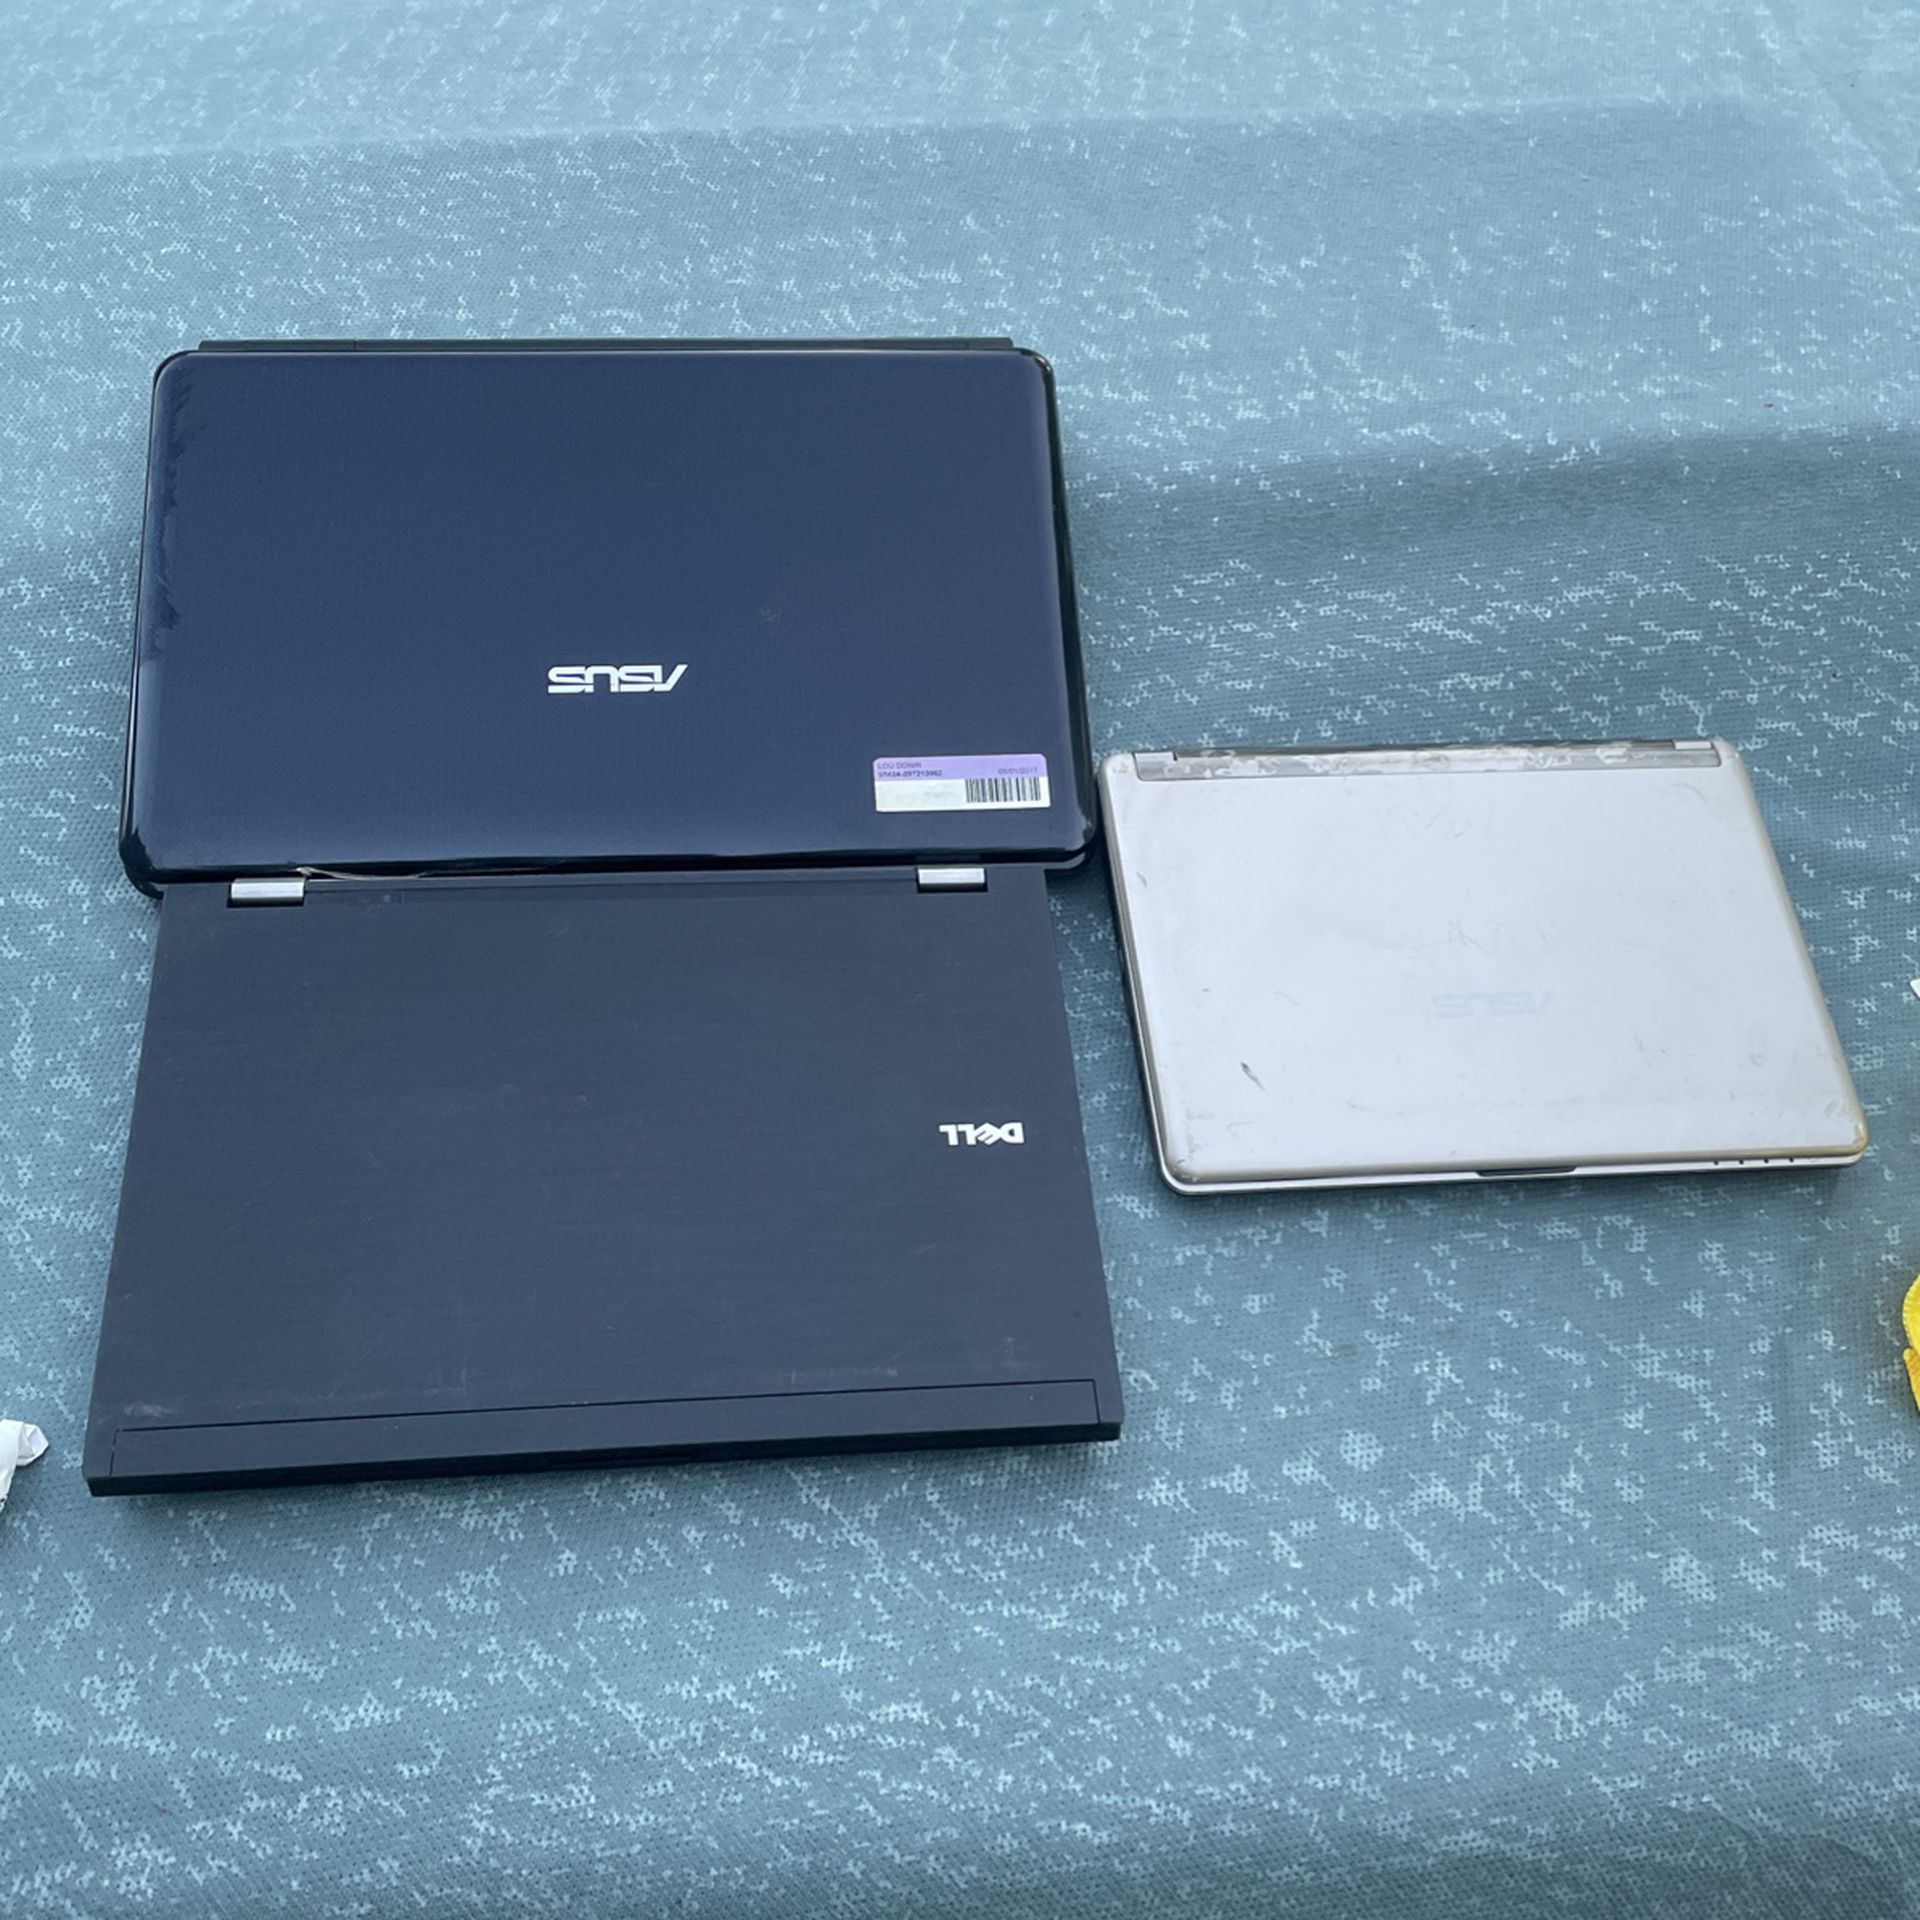 Older Laptops 